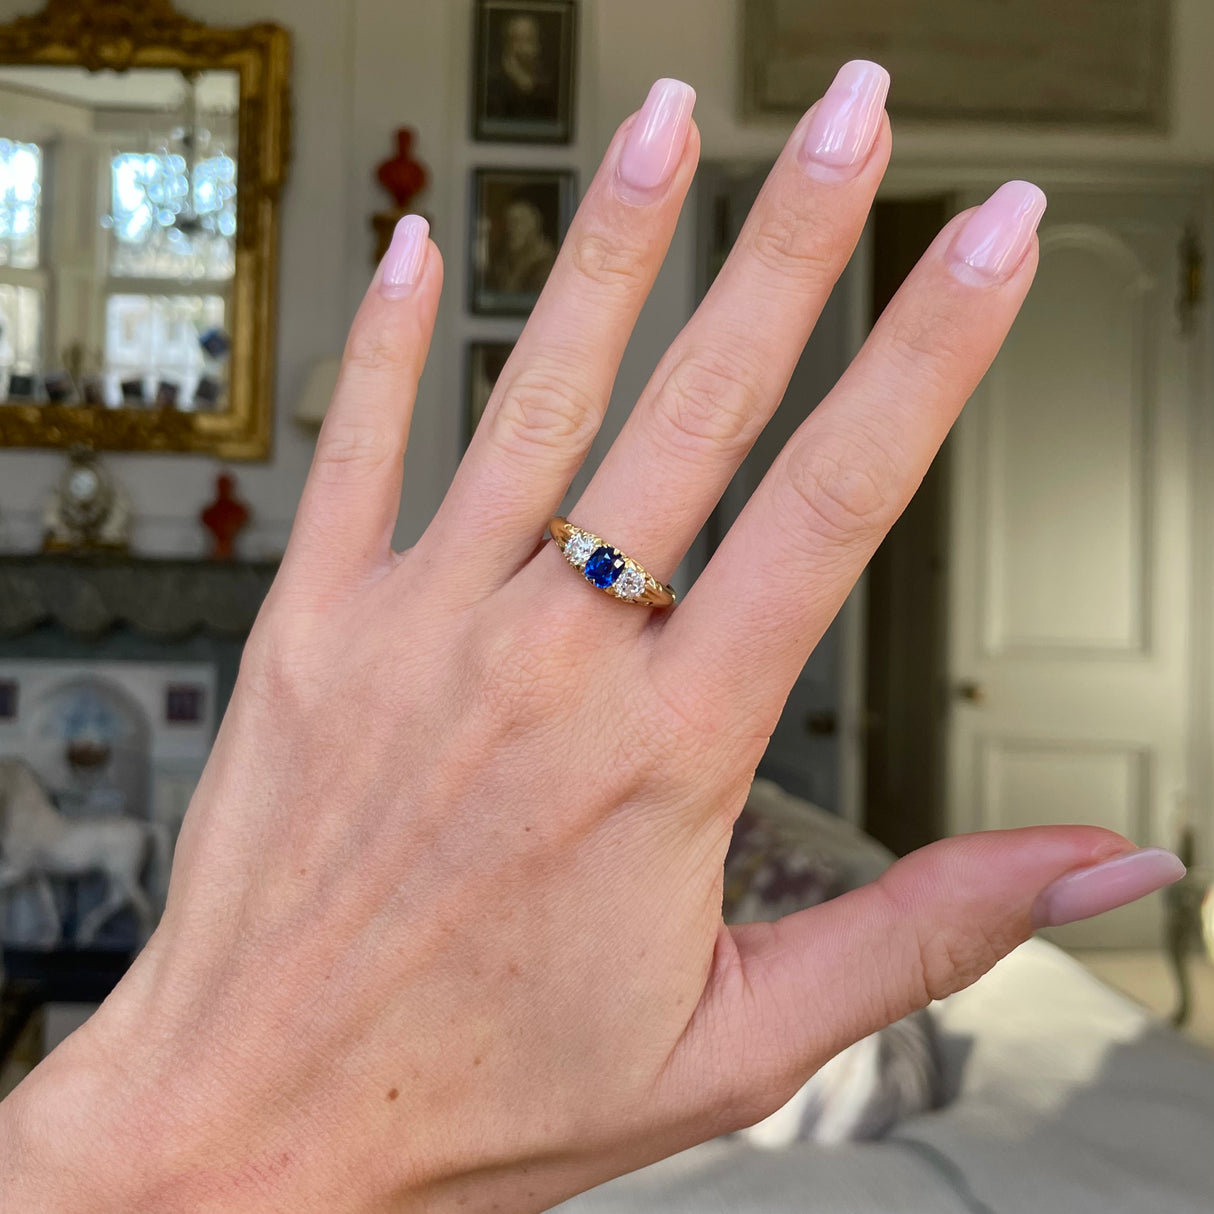 Sapphire and diamond three stone ring, worn on hand.